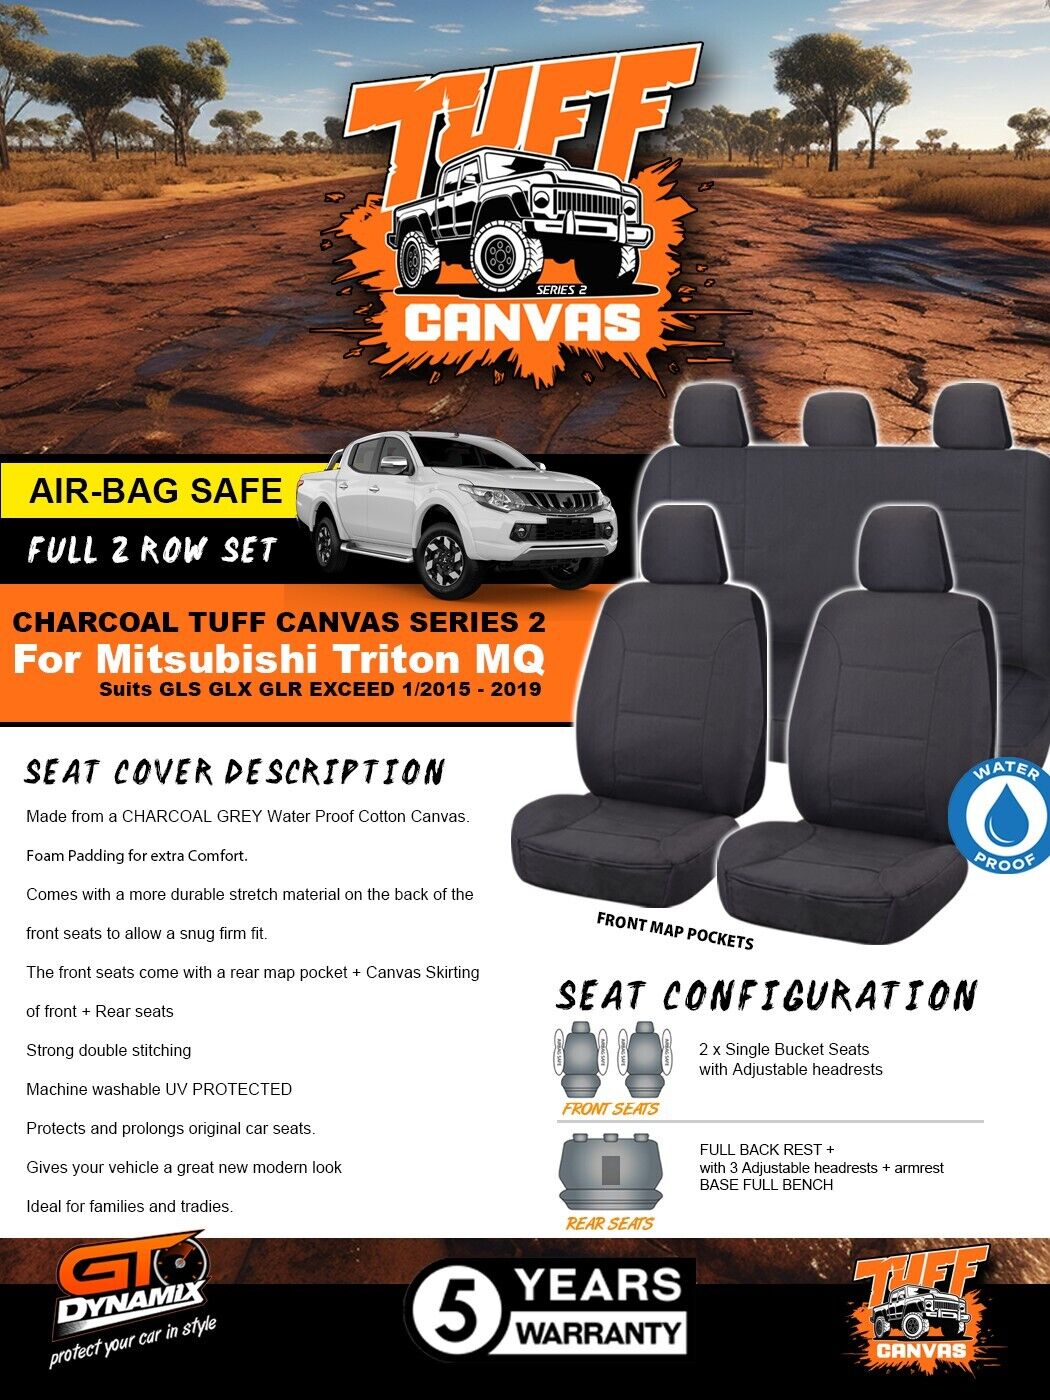 Charcoal Tuff Canvas S2 Seat Covers 2 Rows For Mitsubishi MQ Triton GLS GLR GLX 1/2015-2019